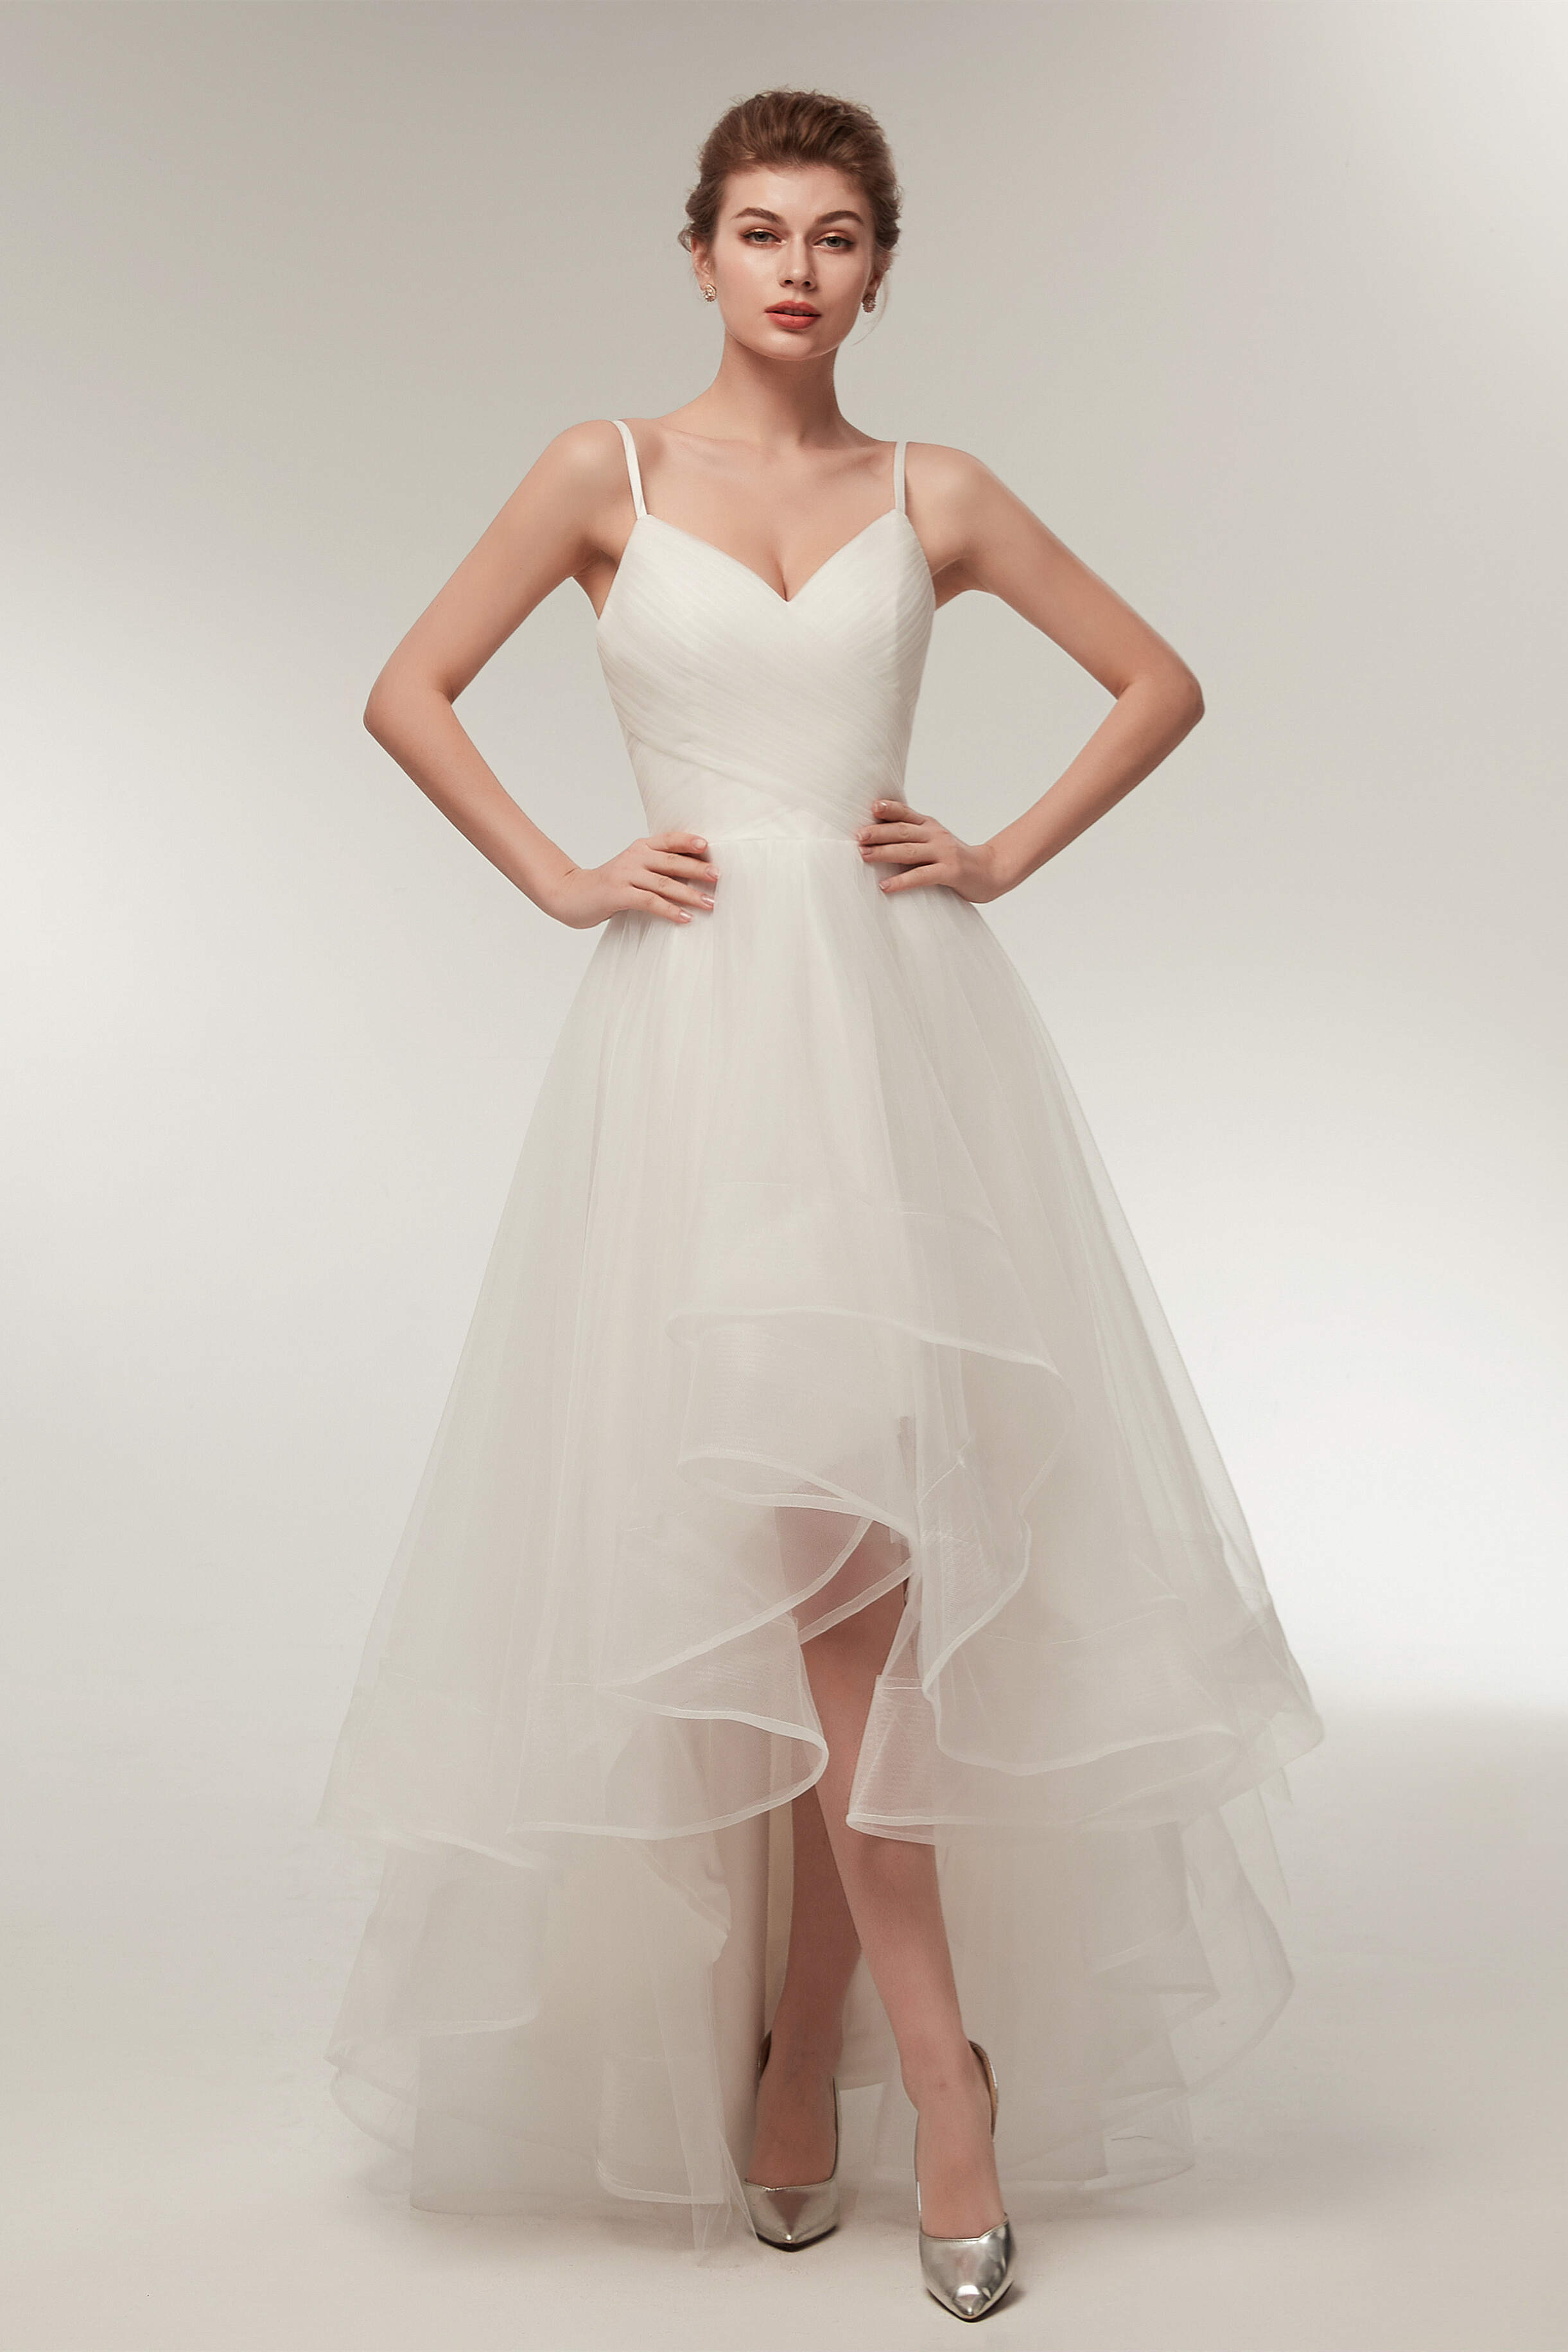 Wedding Dress Style 2028, High Low Spaghetti Straps Minimalist Design Wedding Dresses